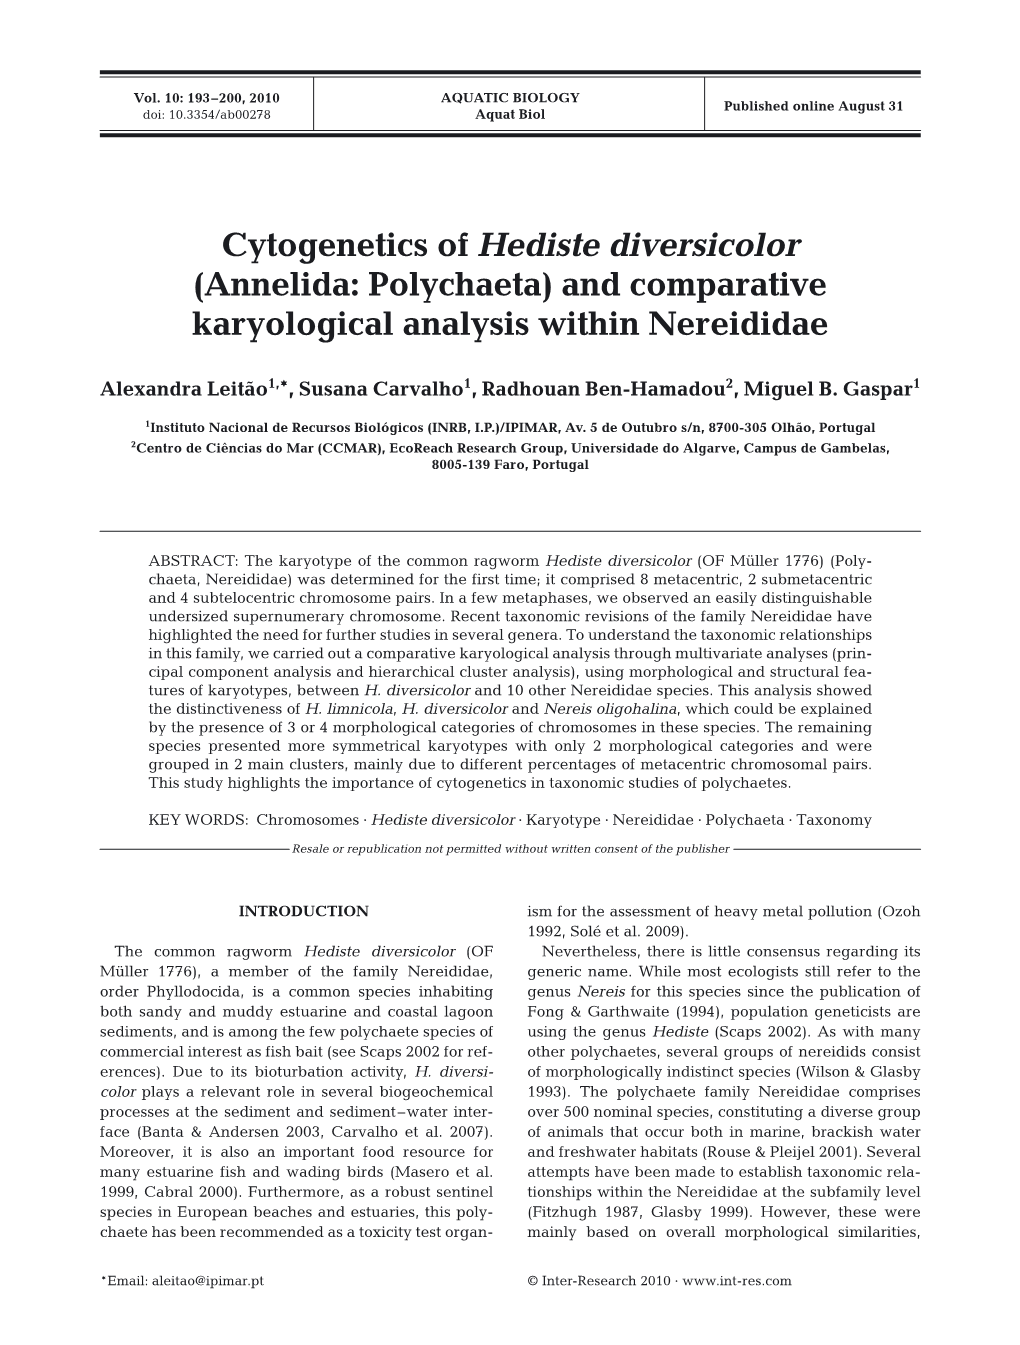 Cytogenetics of Hediste Diversicolor (Annelida: Polychaeta) and Comparative Karyological Analysis Within Nereididae